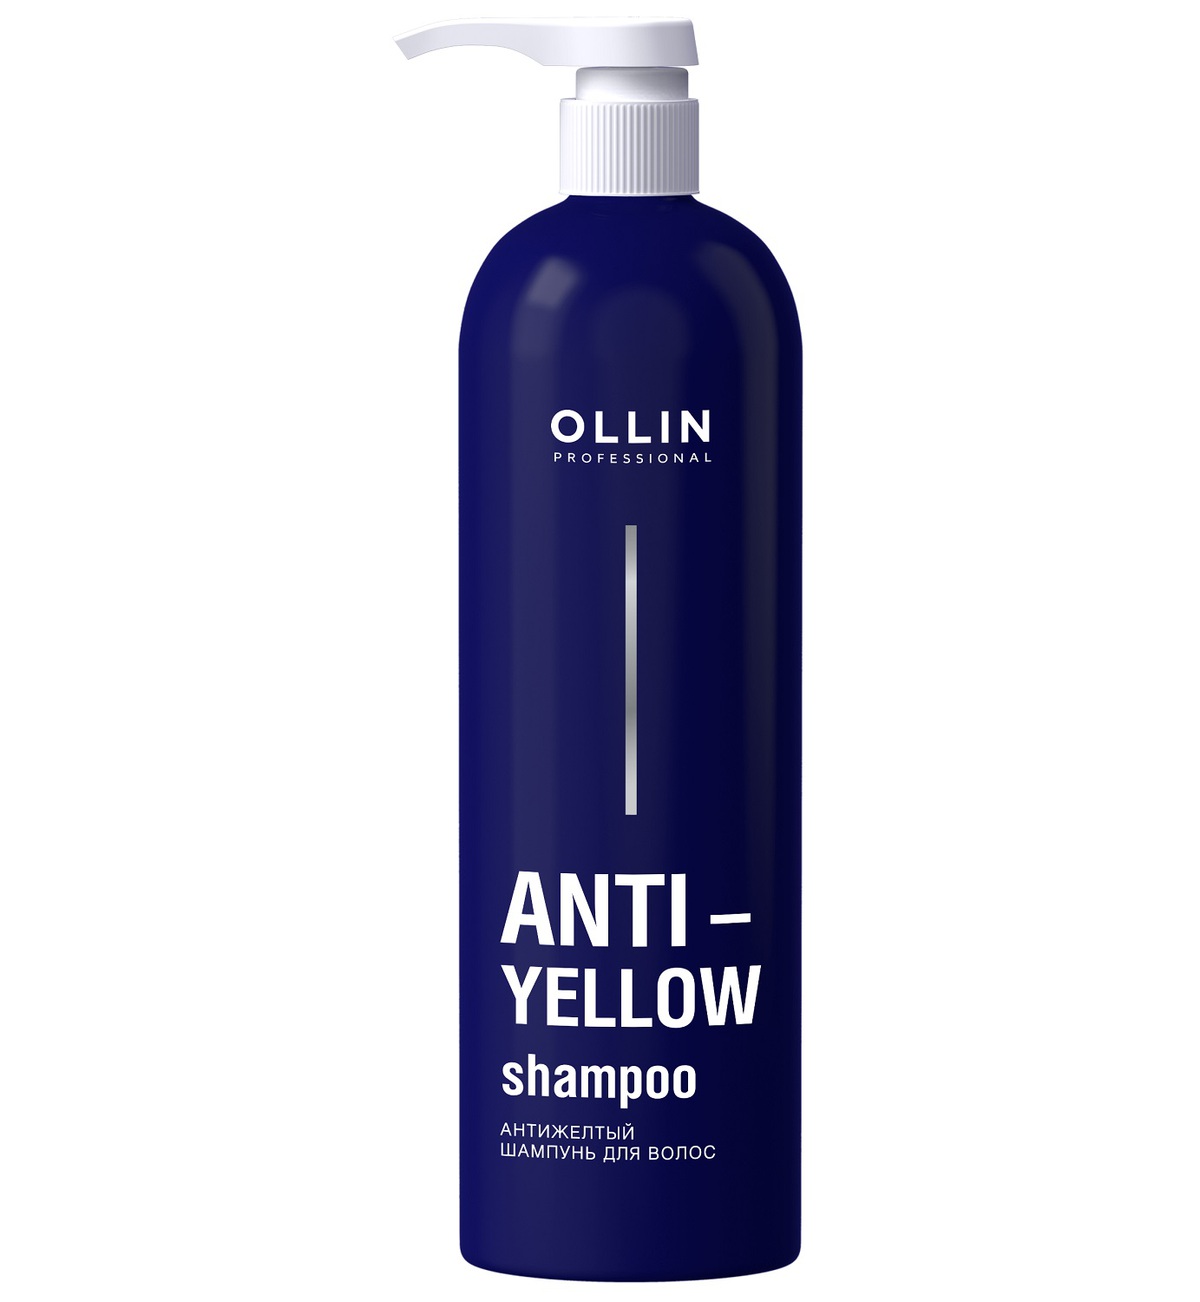 Ollin Professional Антижелтый шампунь для волос Anti-Yellow Shampoo, 500 мл (Ollin Professional, Anti-Yellow) нейтрализующий спрей для волос ollin professional anti yellow 150 мл